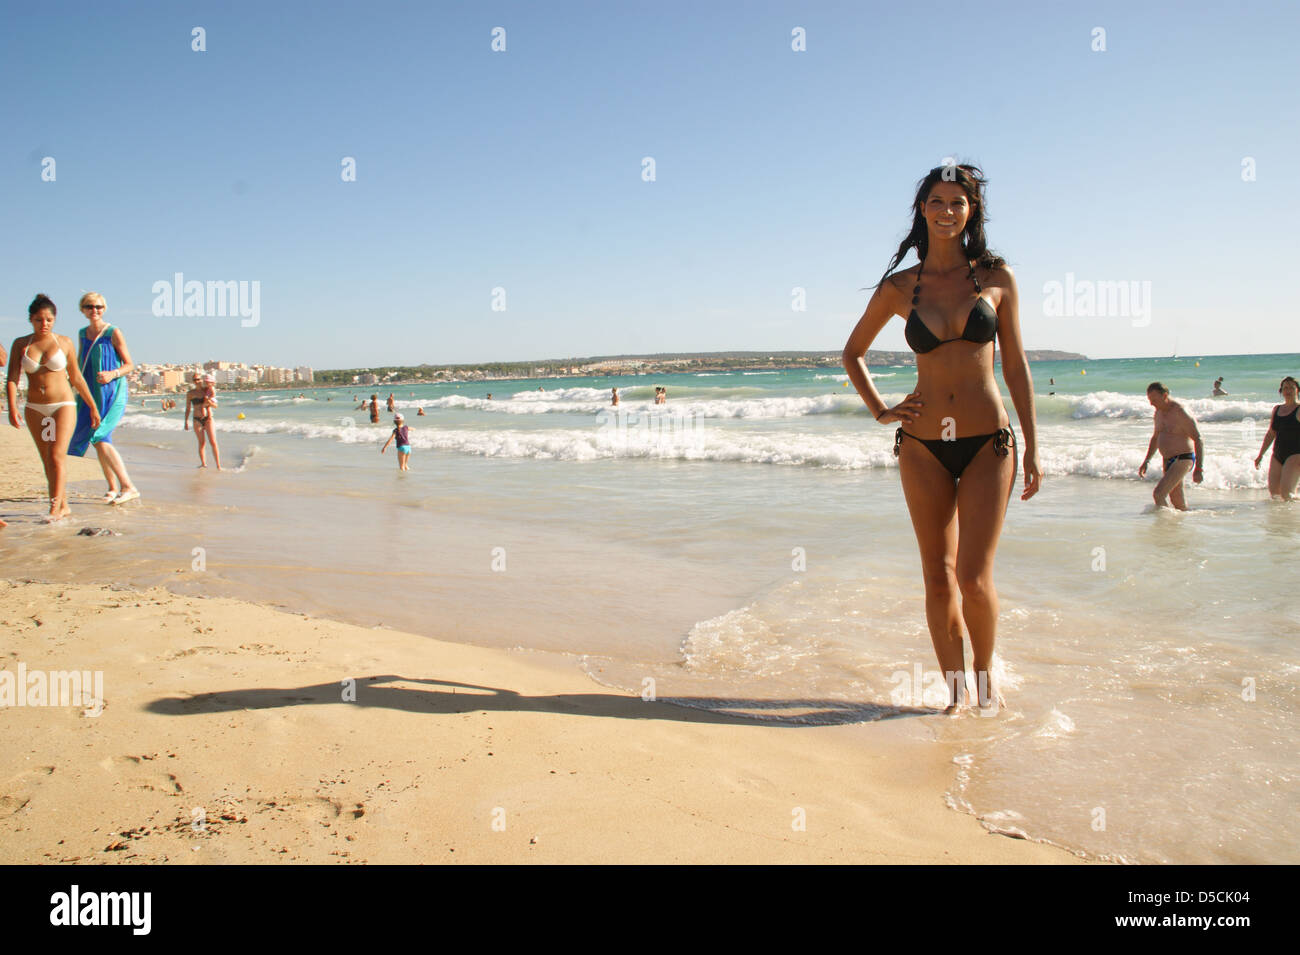 Micaela Schaefer am Strand von El Arenal. Mallorca, Spanien - 26.08.2011 Stockfoto